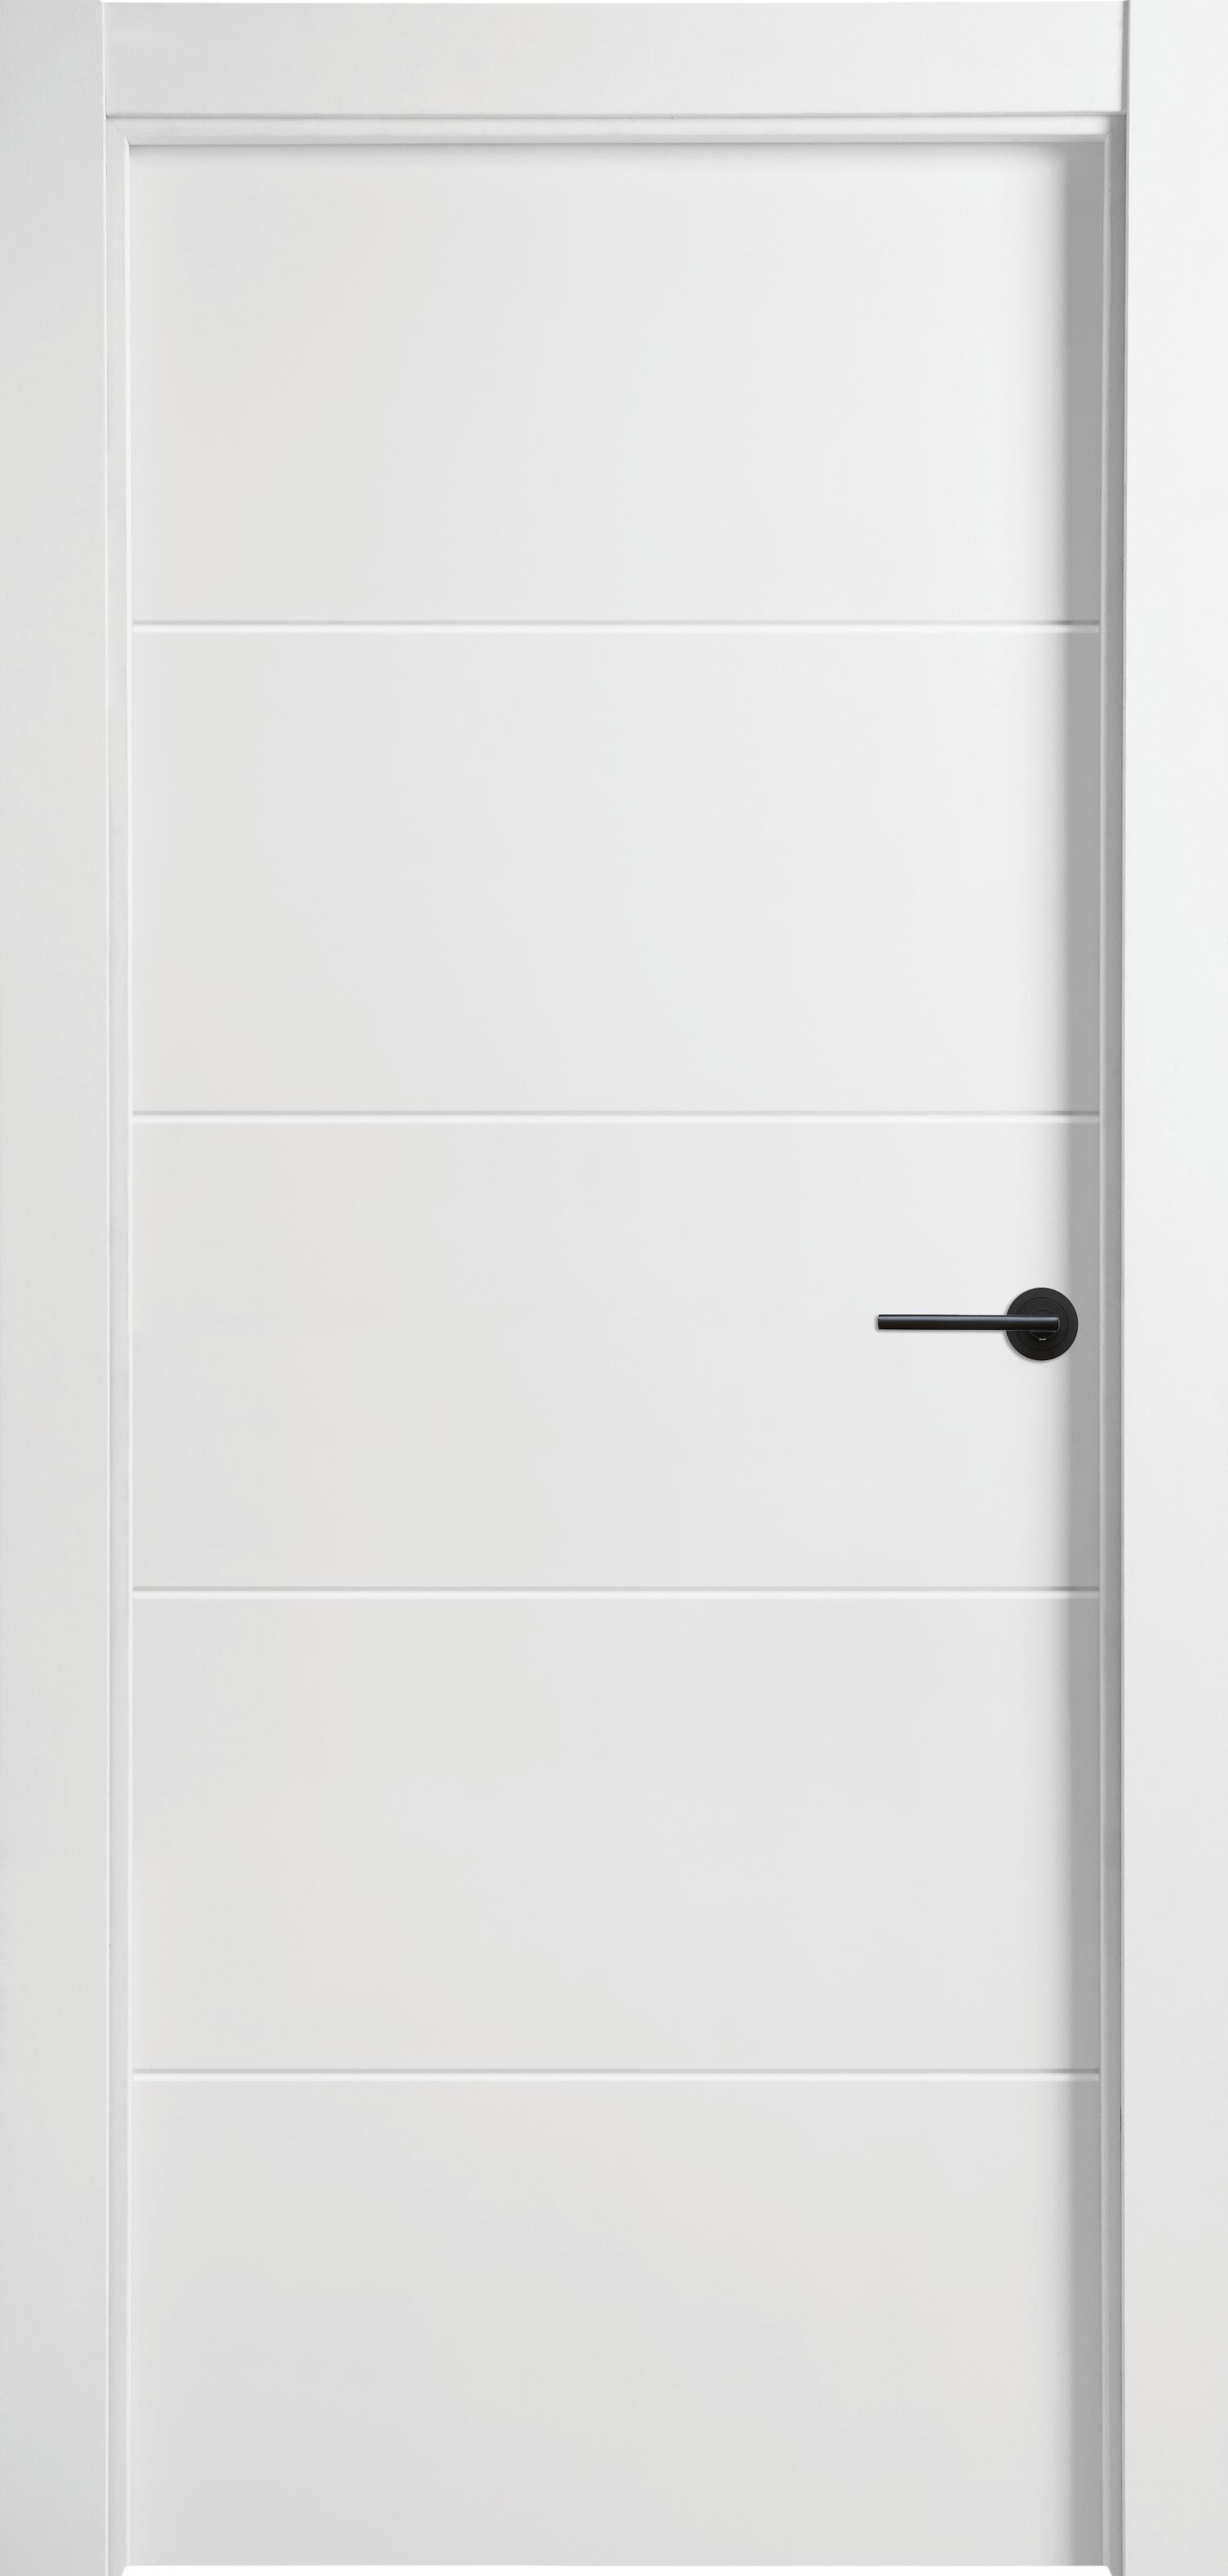 Puerta lucerna plus black blanco de apertura izquierda de 9x62.5 cm